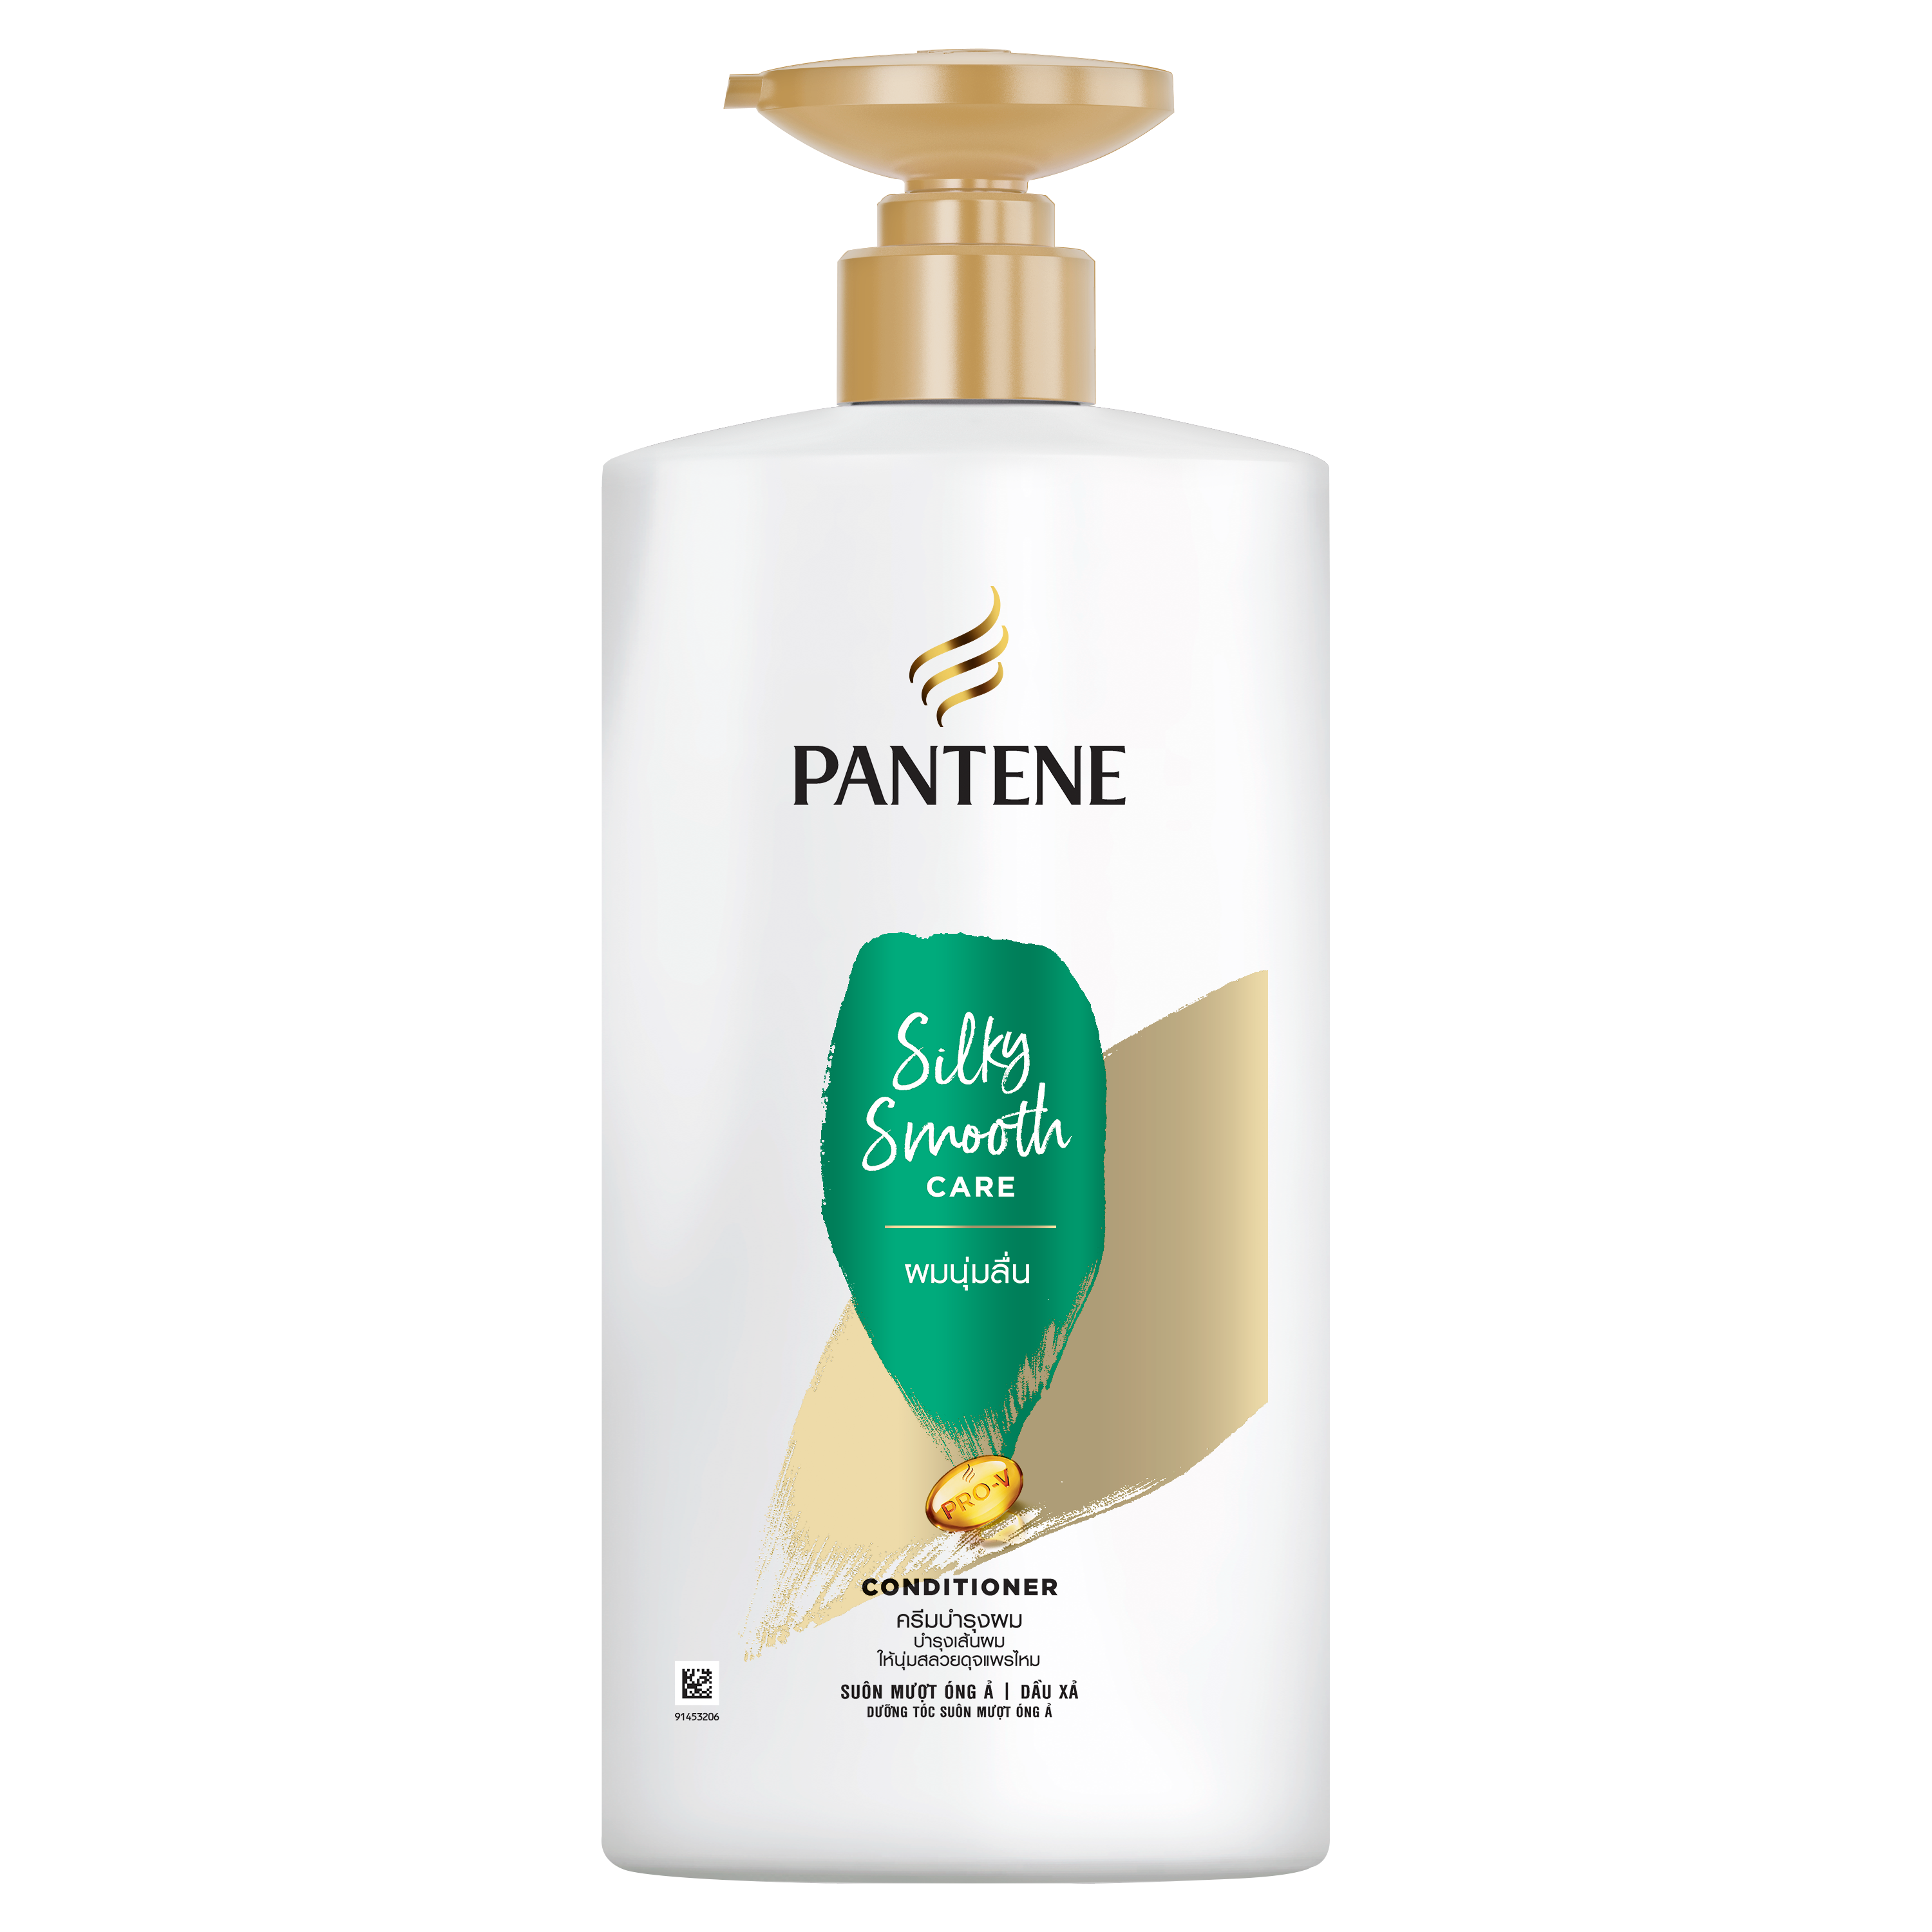 Pantene Silky Smooth Care Shampoo 380ml.